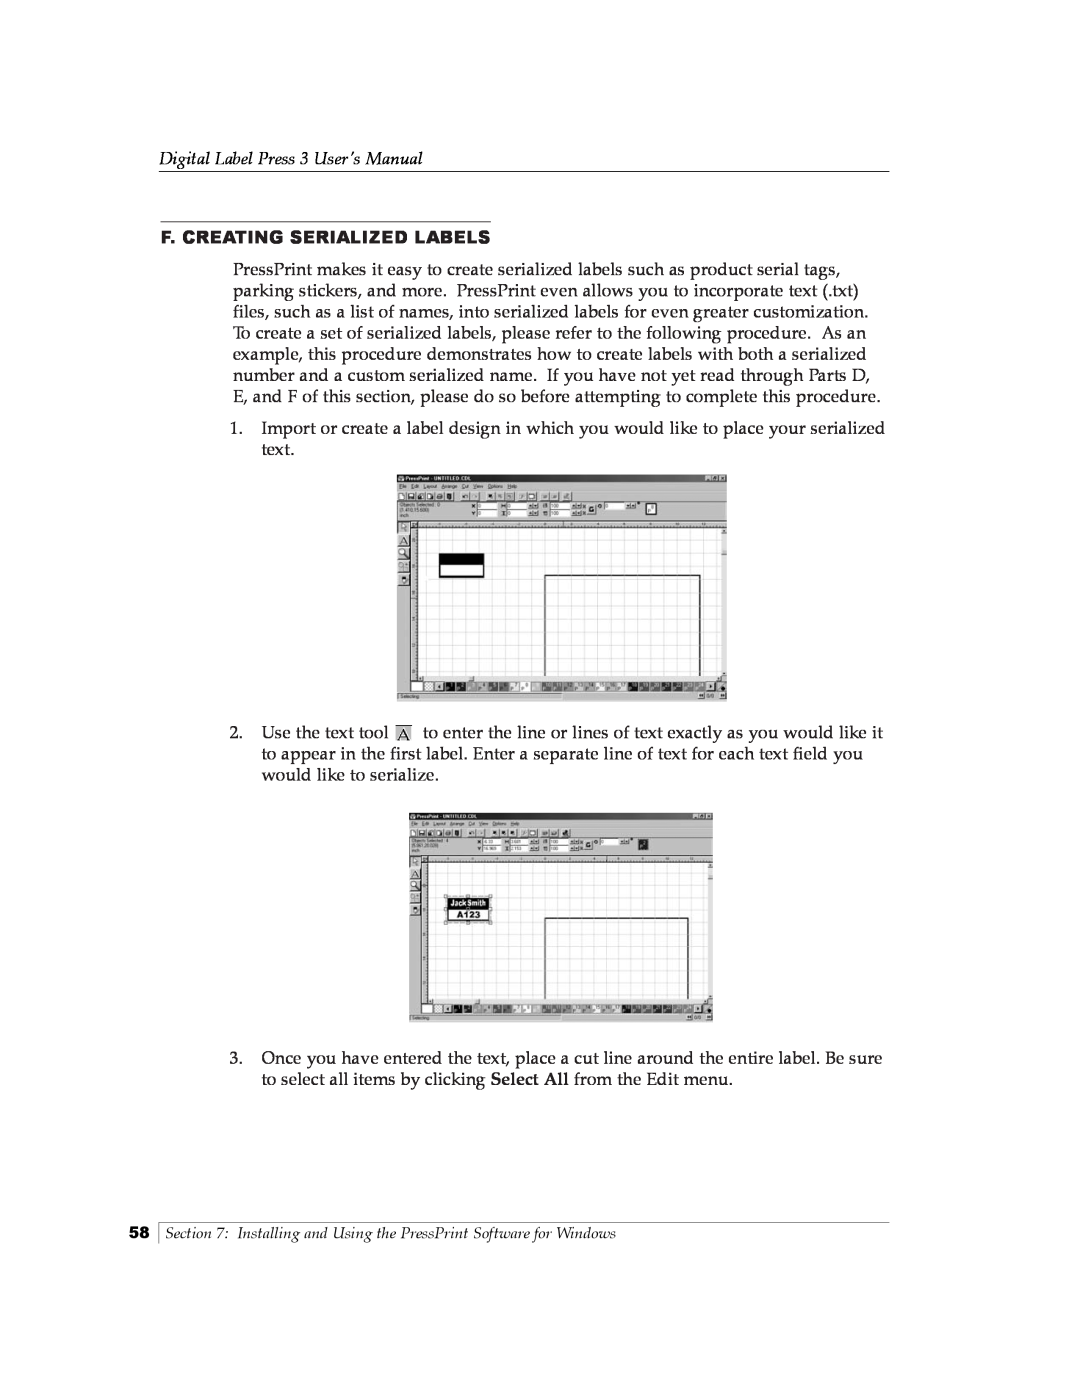 Primera Technology 510212 manual F. Creating Serialized Labels, Digital Label Press 3 User’s Manual 